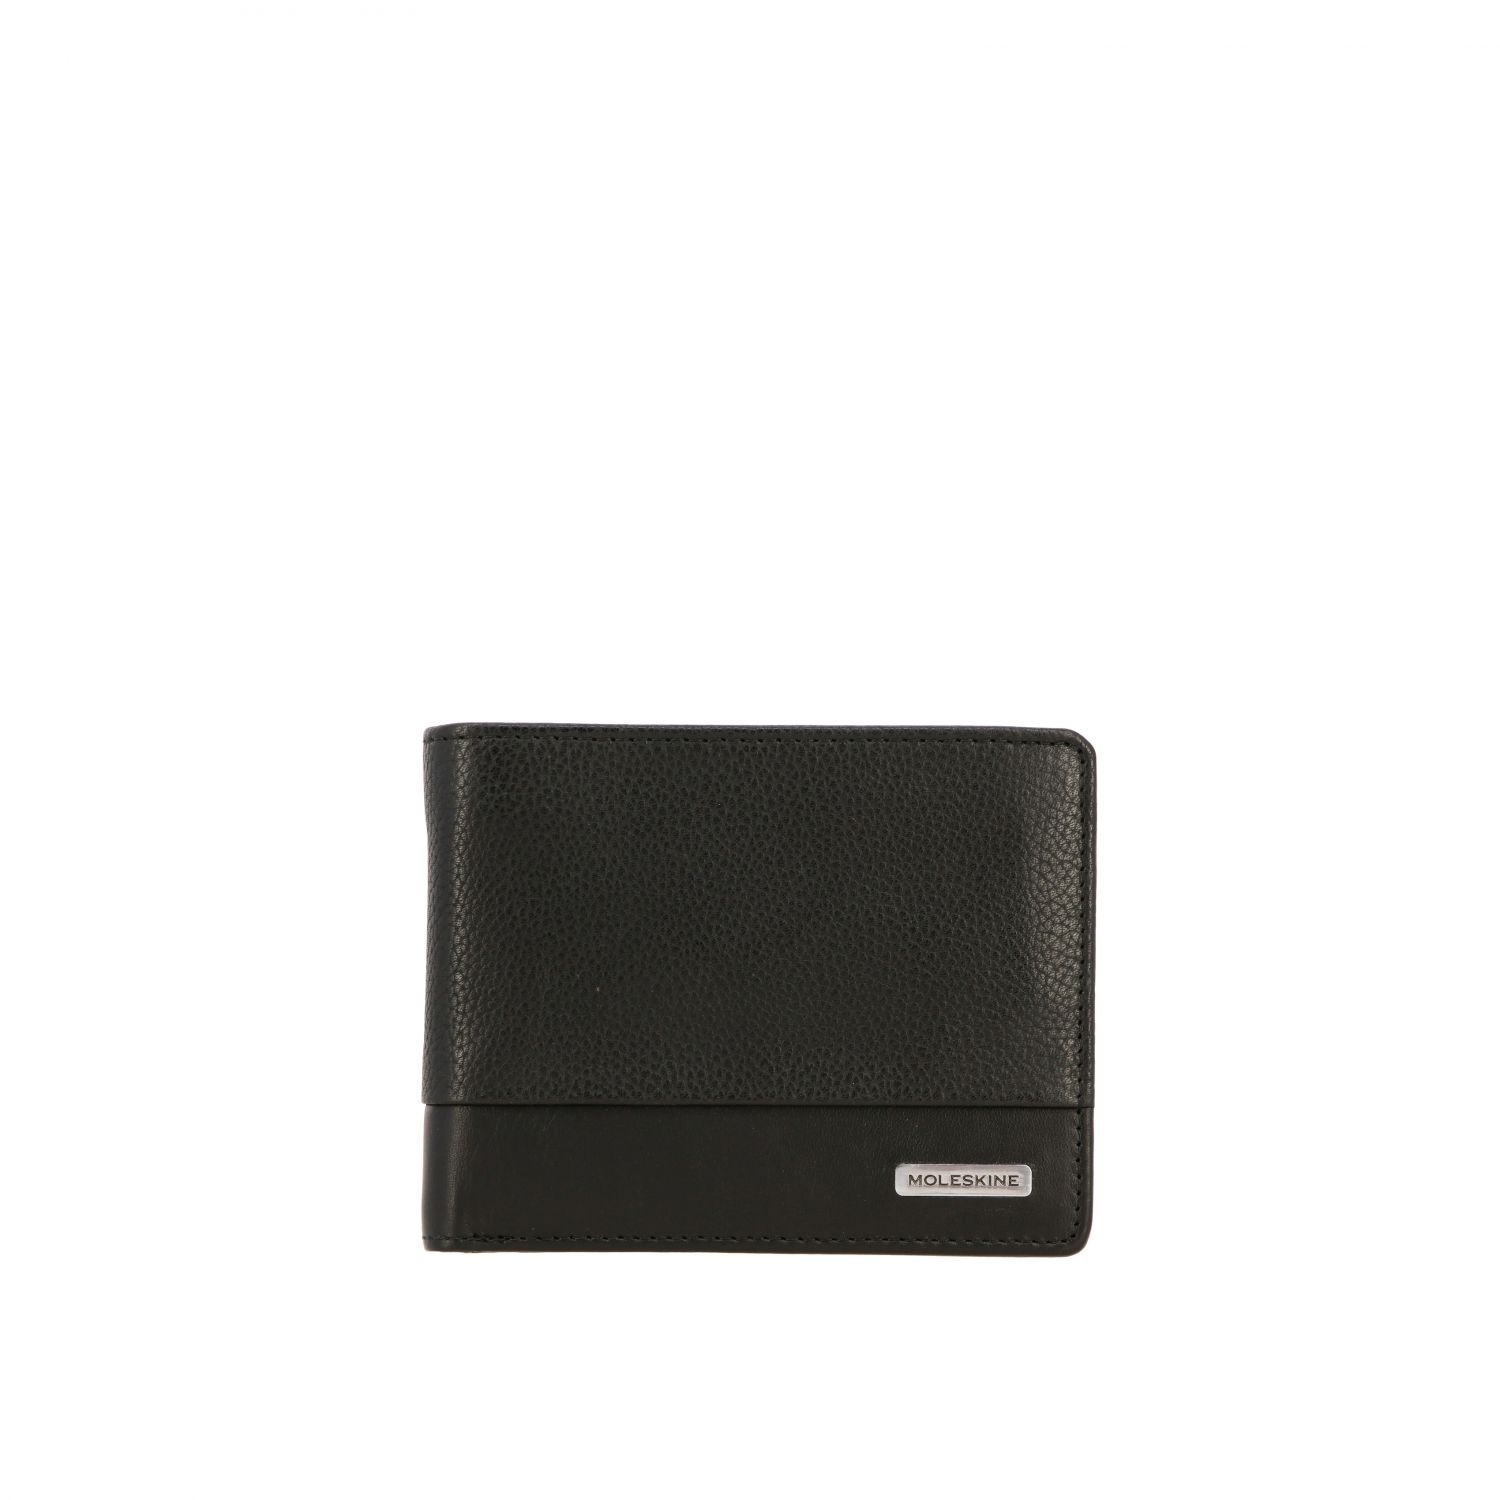 MOLESKINE: wallet for man - Black | Moleskine wallet 8058647627519 ...